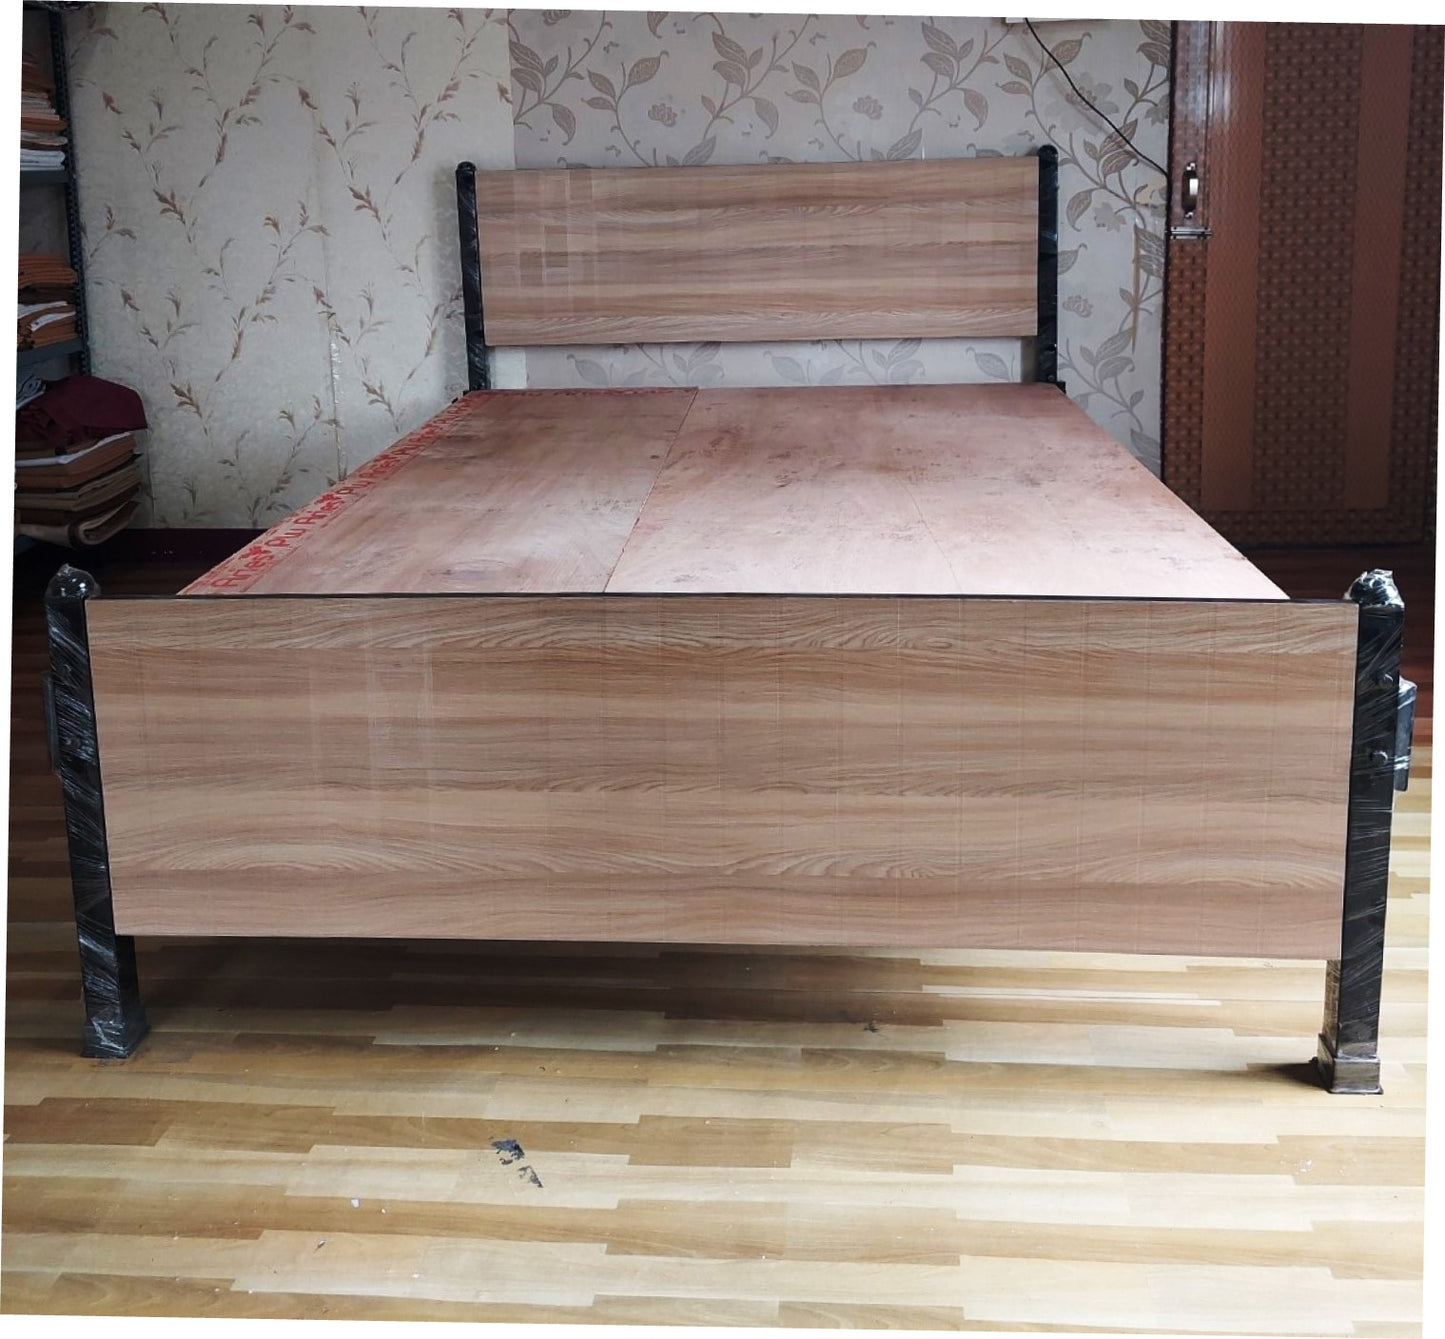 Bowzar Queen Size 5X6.5 Feet Metal Bed With Wooden Look